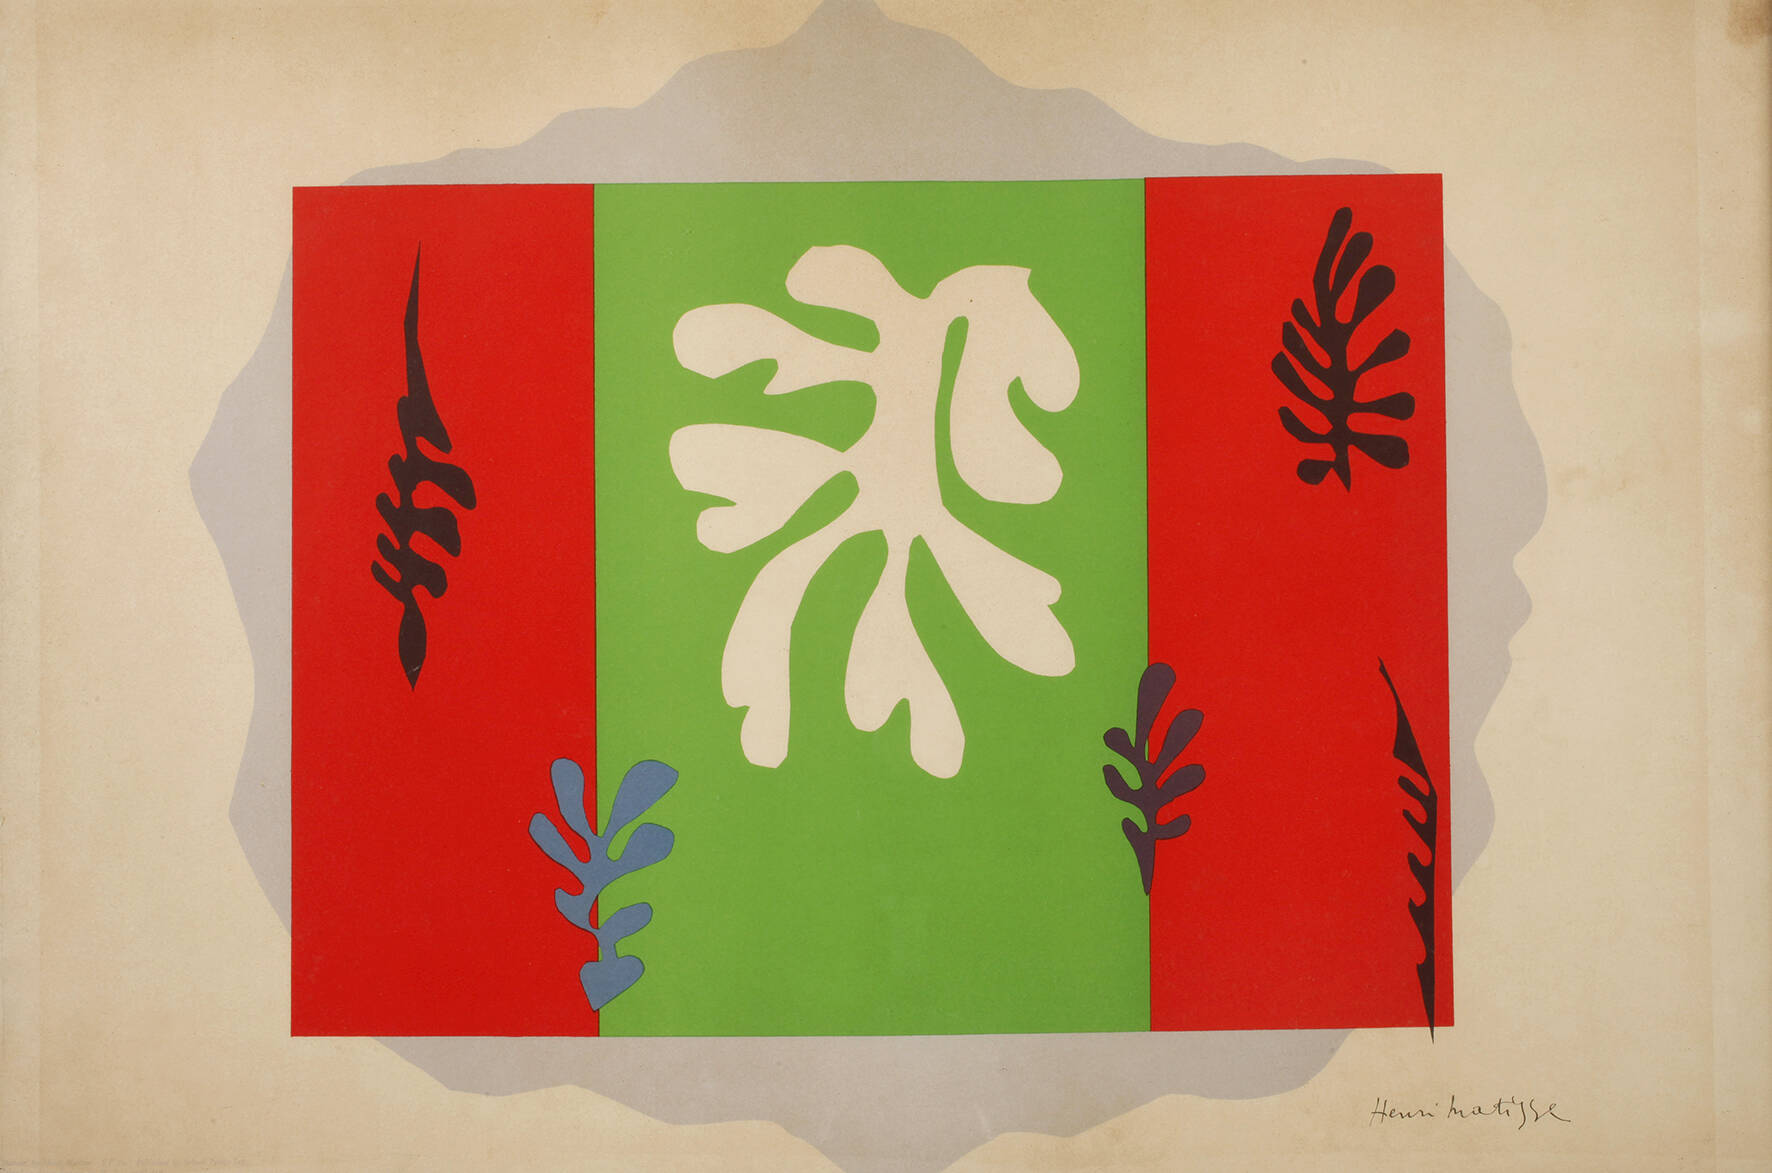 Henry Matisse, "The Dancer"